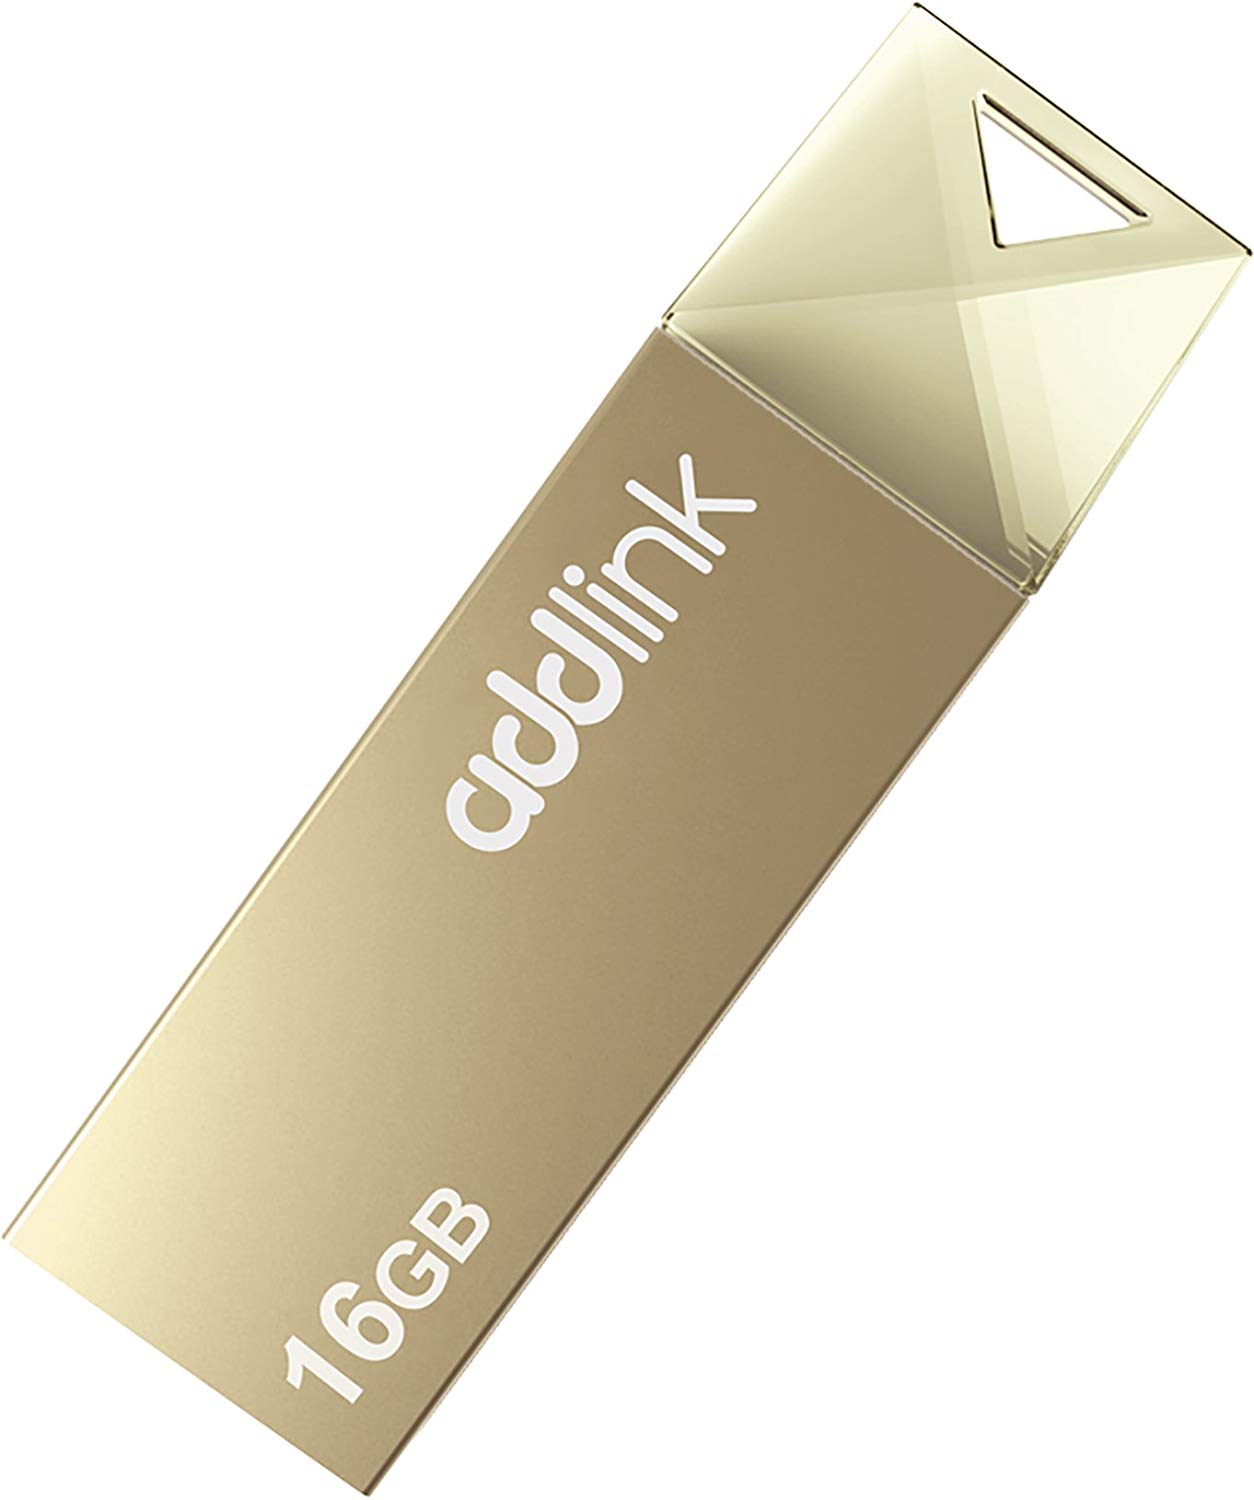 Ổ cứng di động - USB Addlink 16GB U10C2 (Champagne)